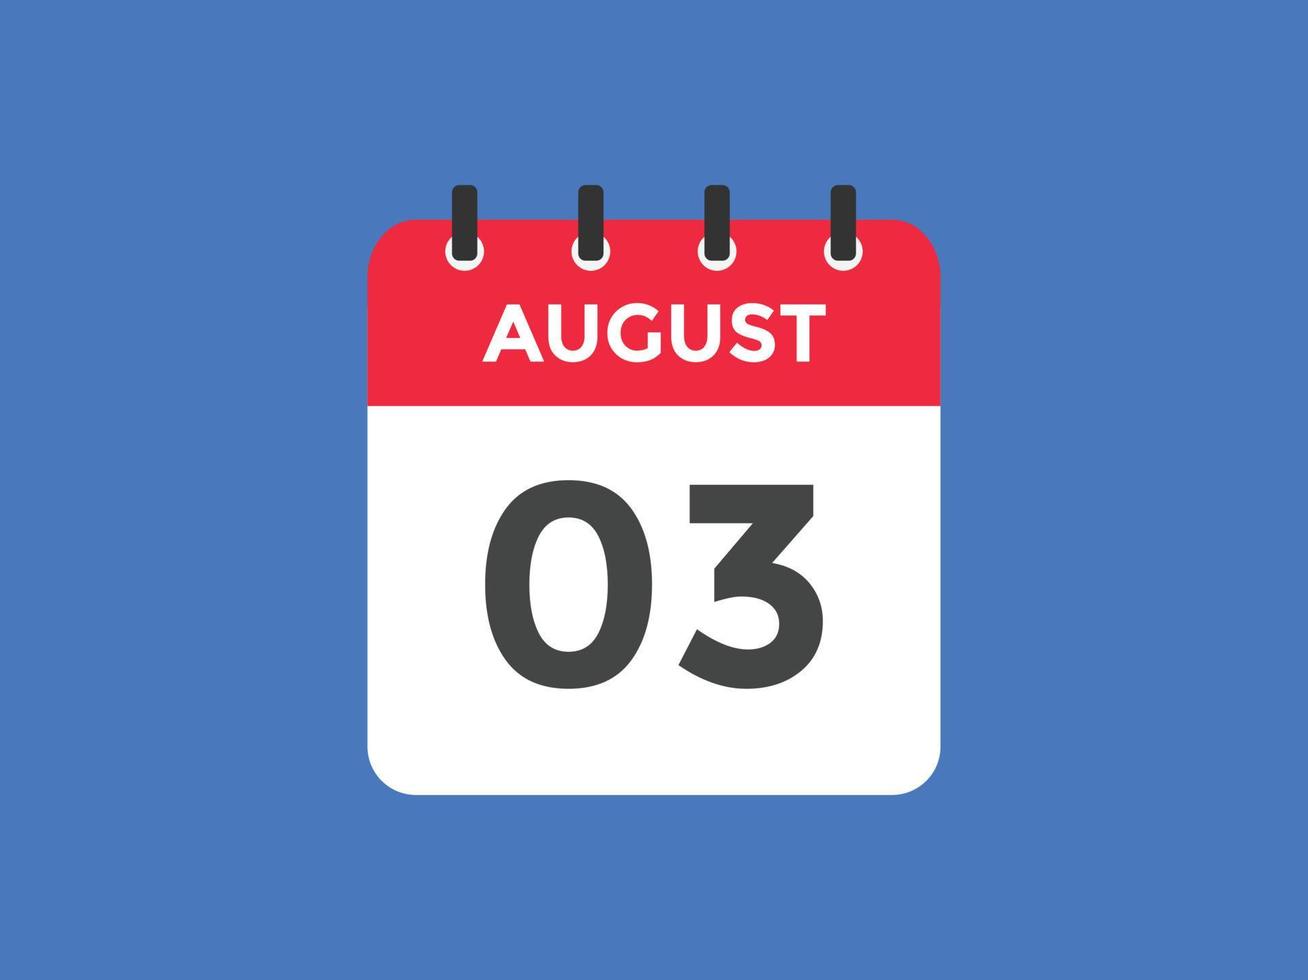 augusti 3 kalender påminnelse. 3:e augusti dagligen kalender ikon mall. kalender 3:e augusti ikon design mall. vektor illustration